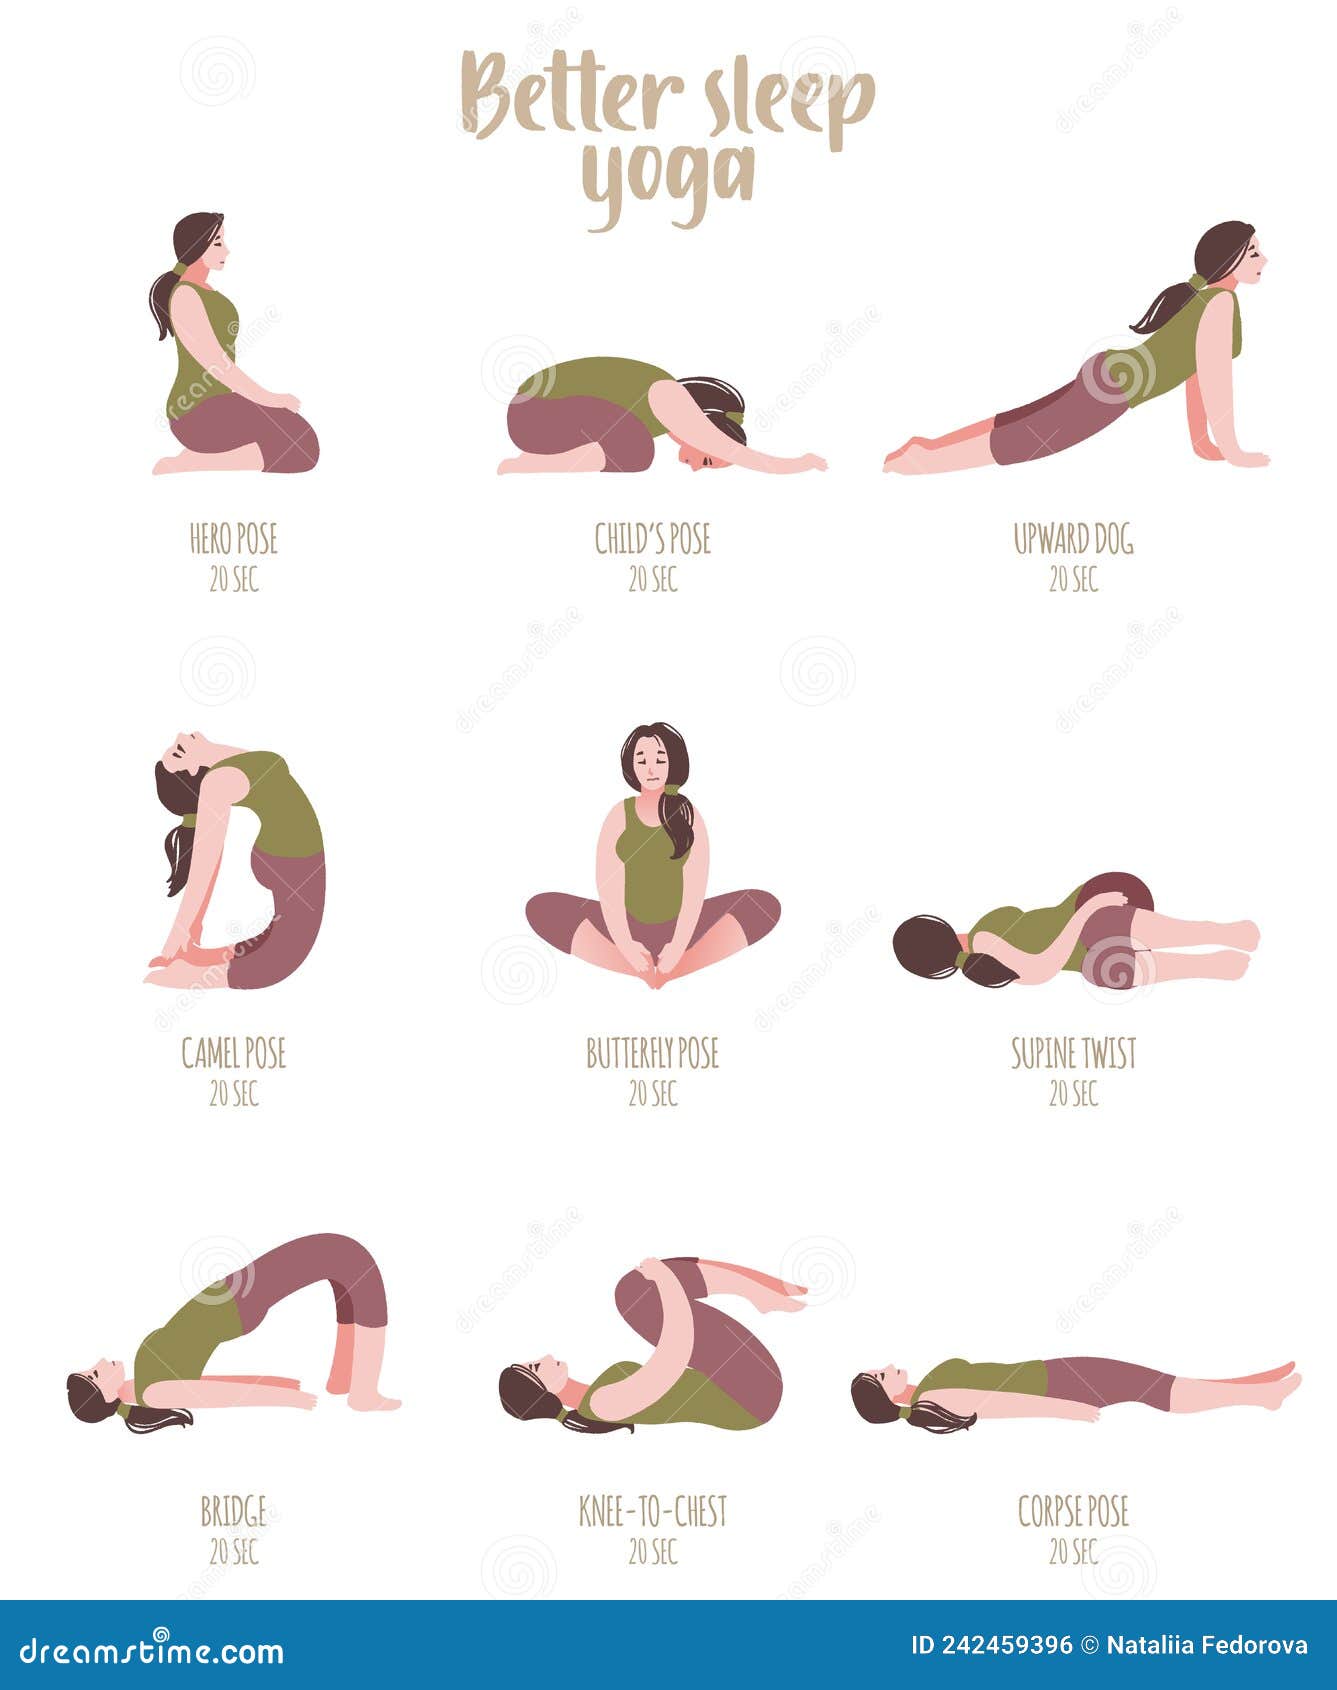 Yoga Poses To Sleep Better | Prevention